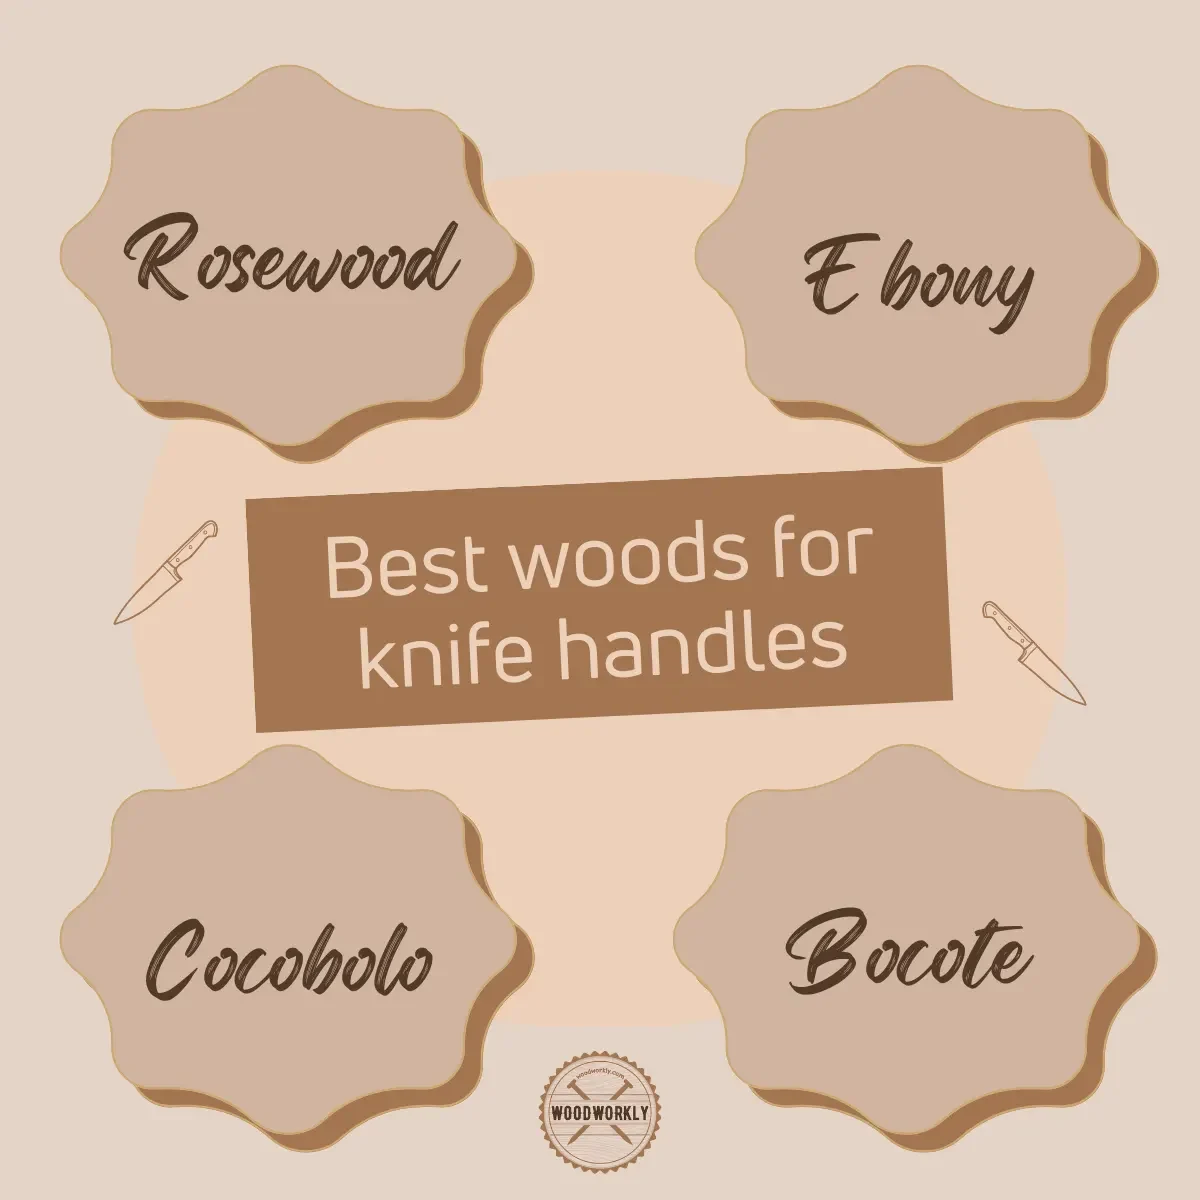 Best woods for knife handles